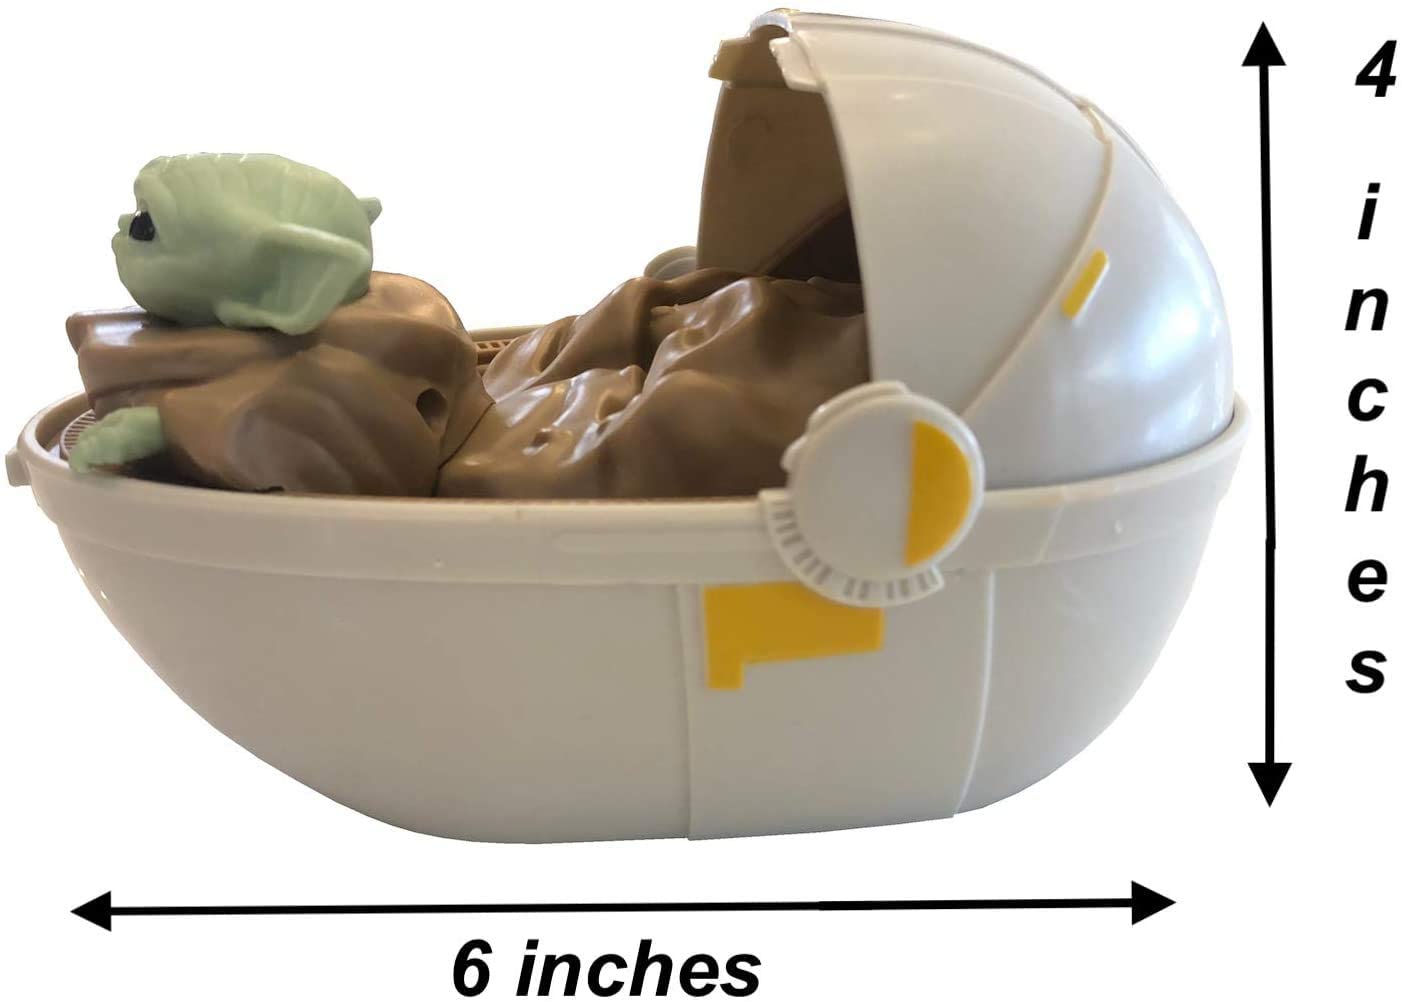 Mandalorian - Juguete de Baby Yoda, The Child en Cochecito, Coche en forma de cuna con control remoto